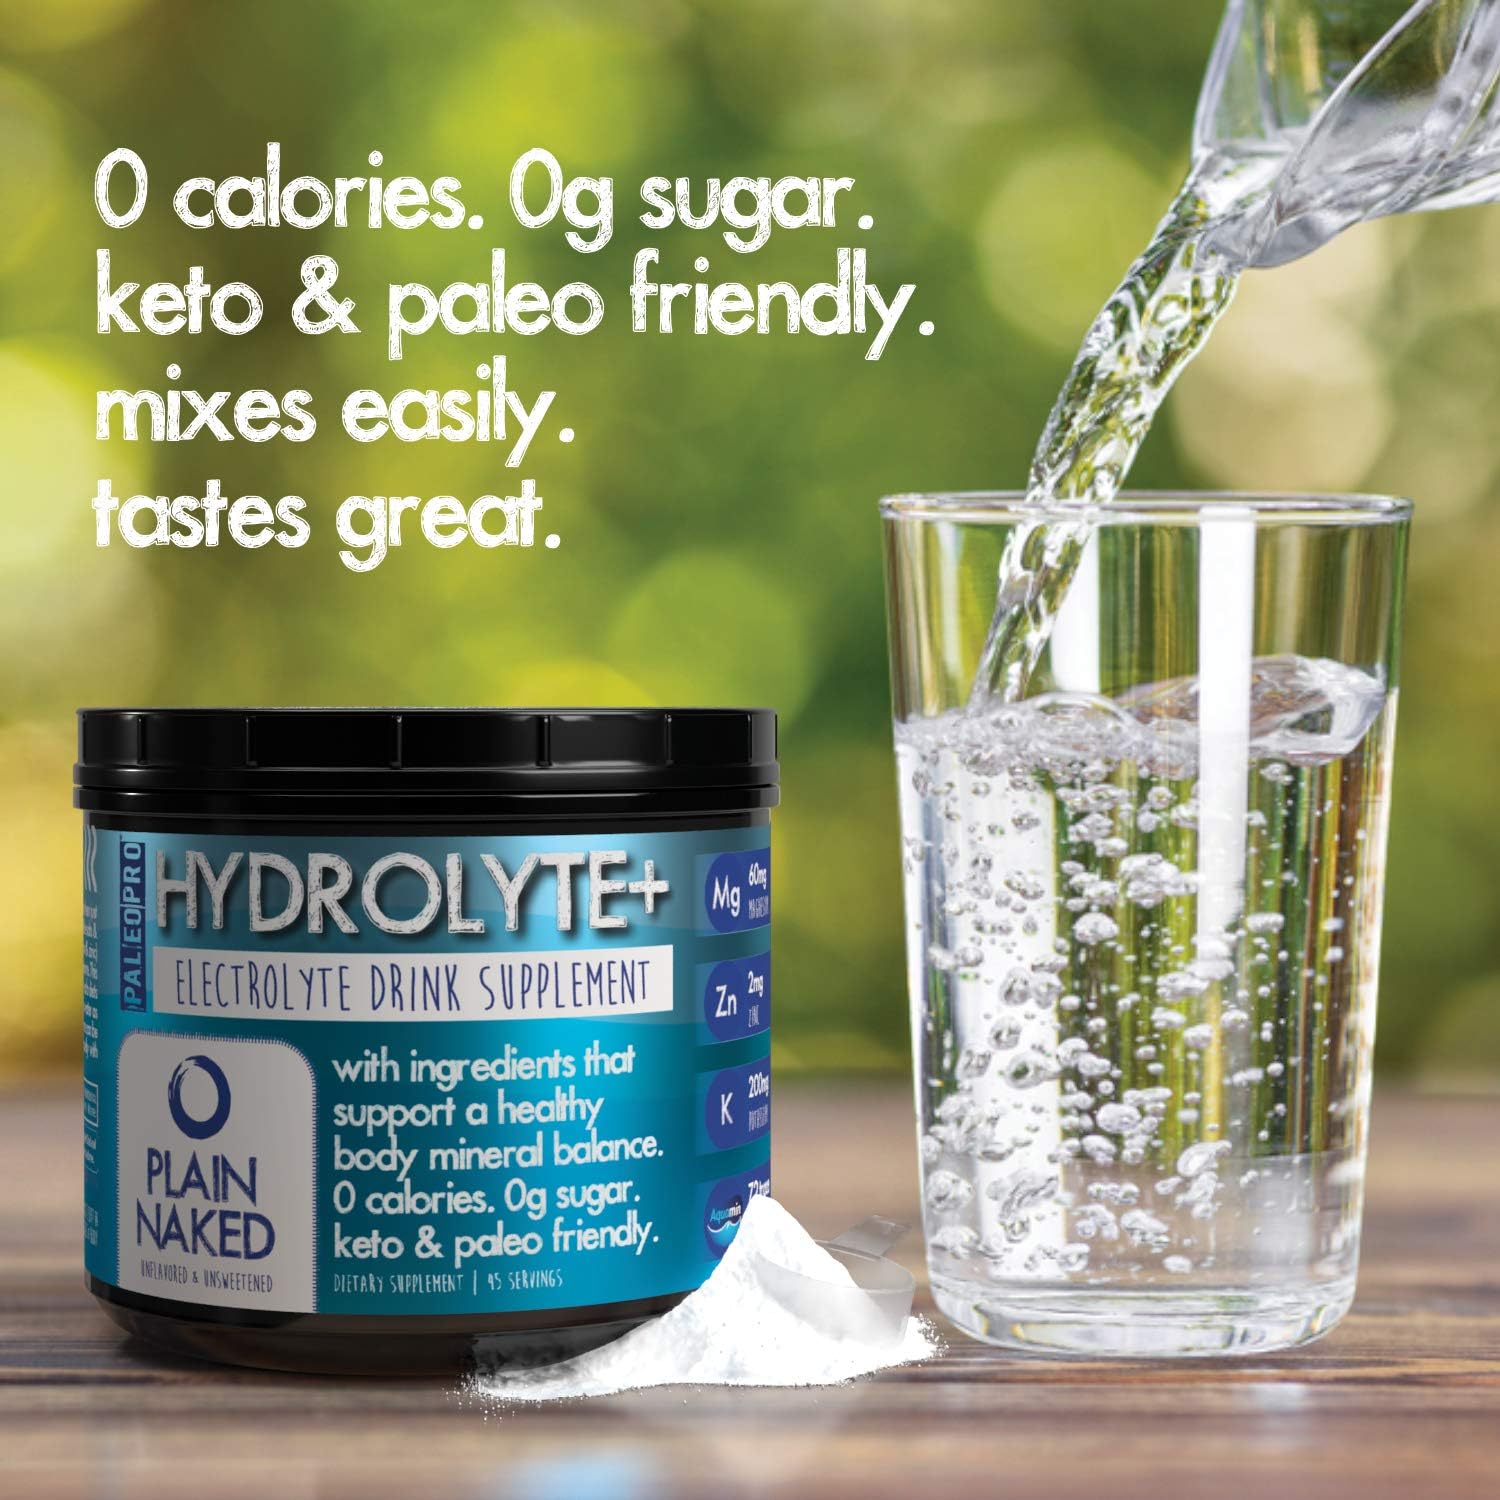 Paleo Pro HYDROLYTE+ Electrolyte Powder Drink Mix, Hydration Supplemen